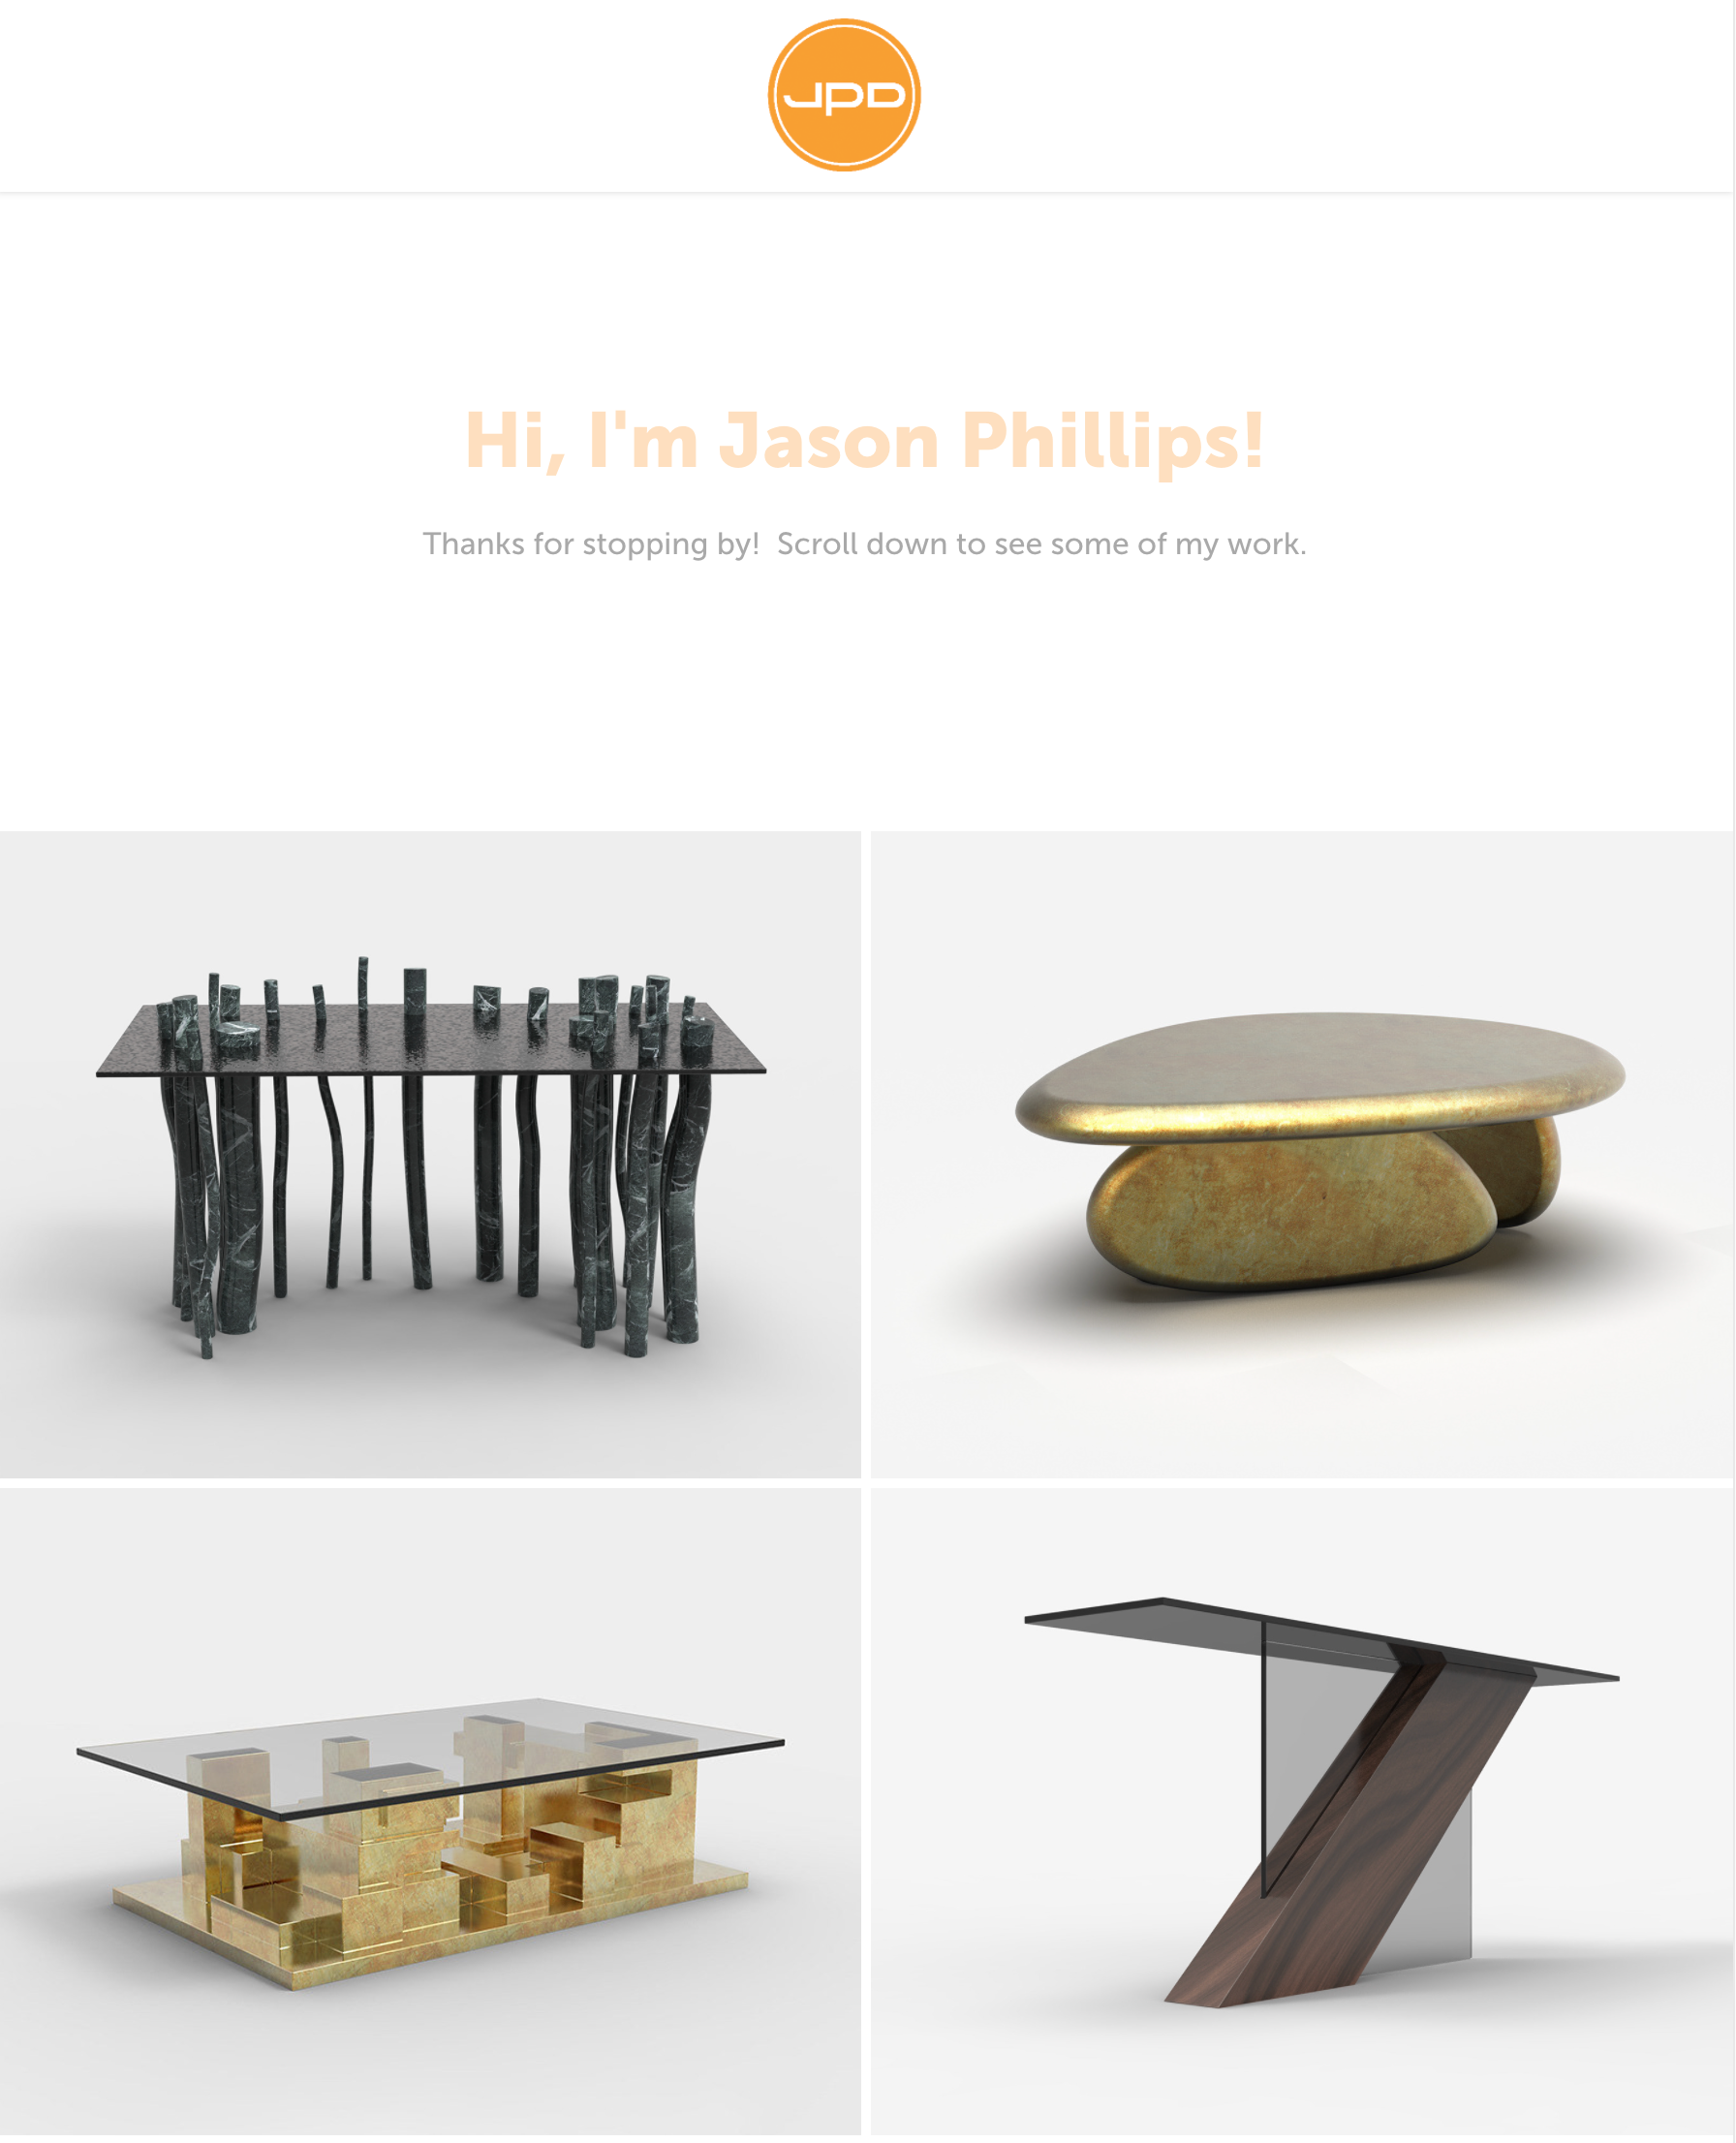 (c) Jasonphillipsdesign.com